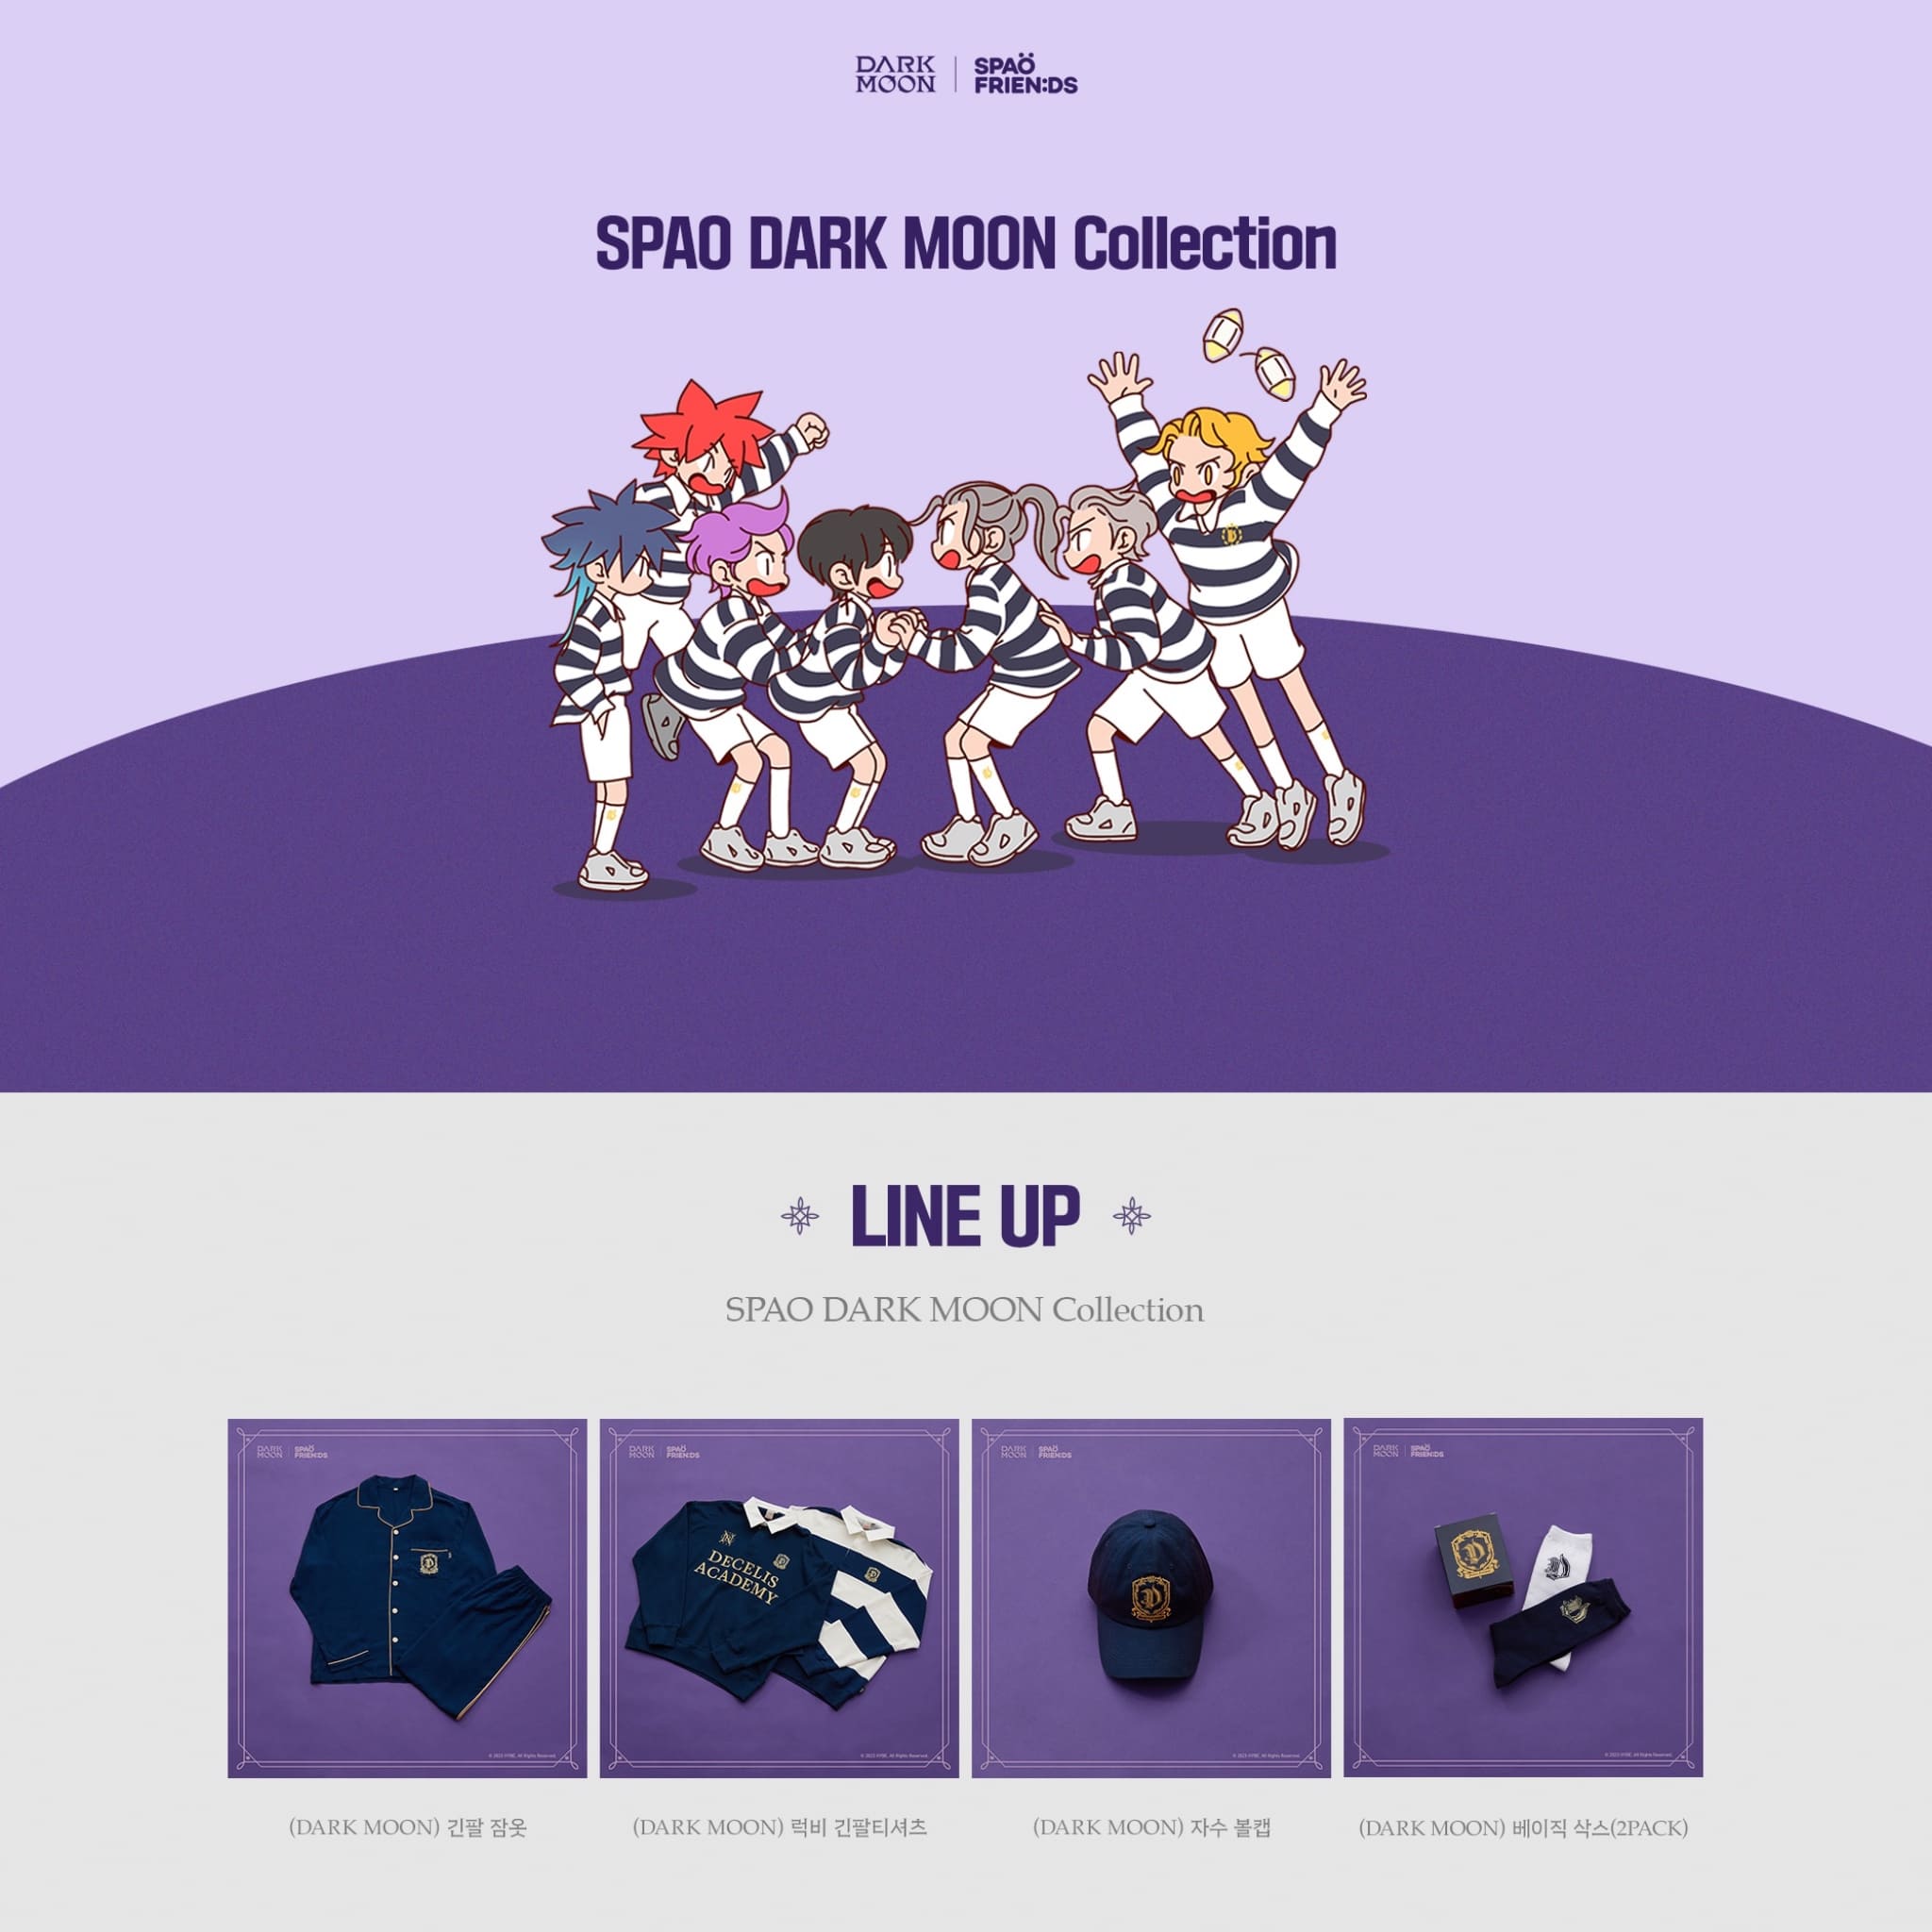 Stray Kids • Ver.2 Official Lightstick – Kpop Moon